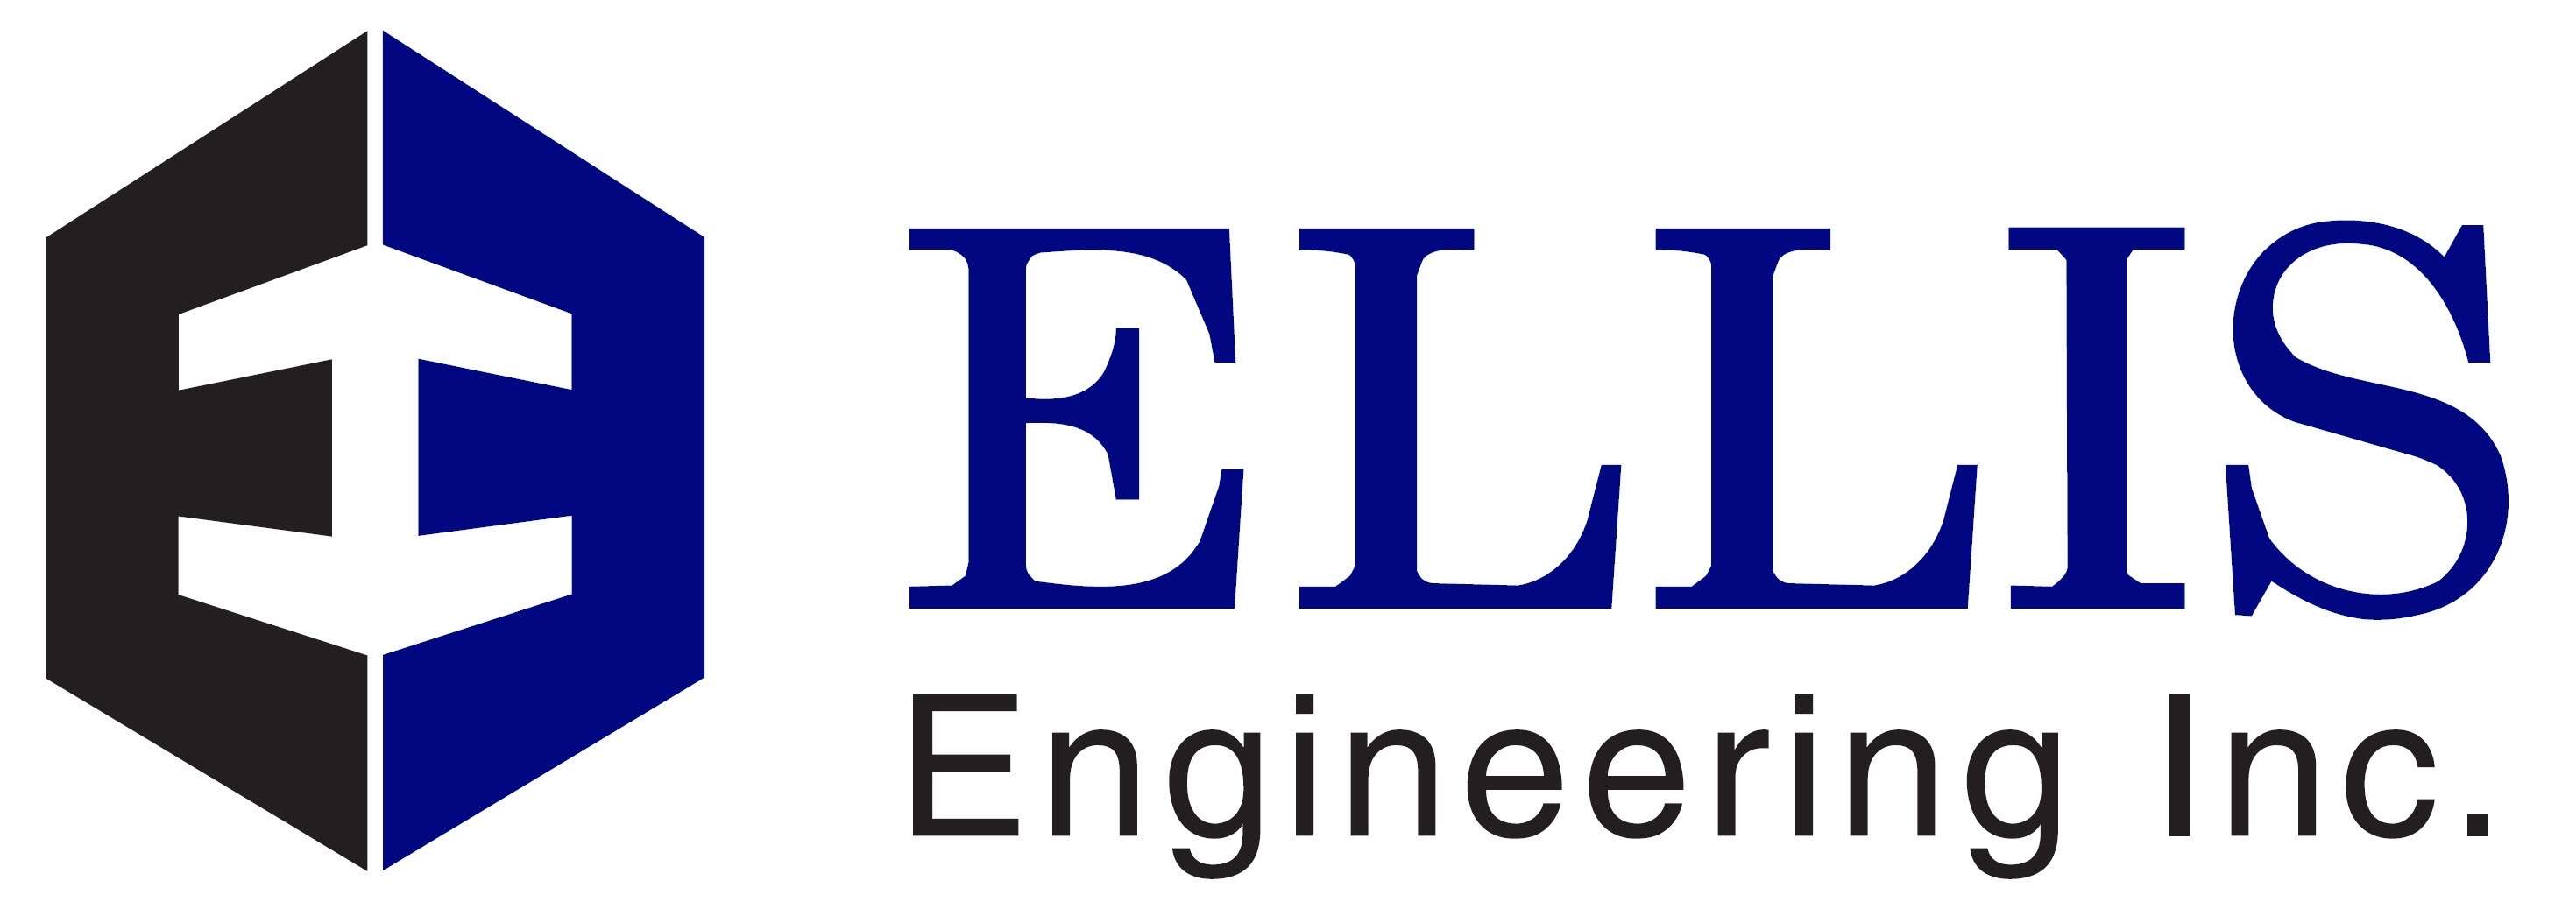 Ellis Engineering Inc